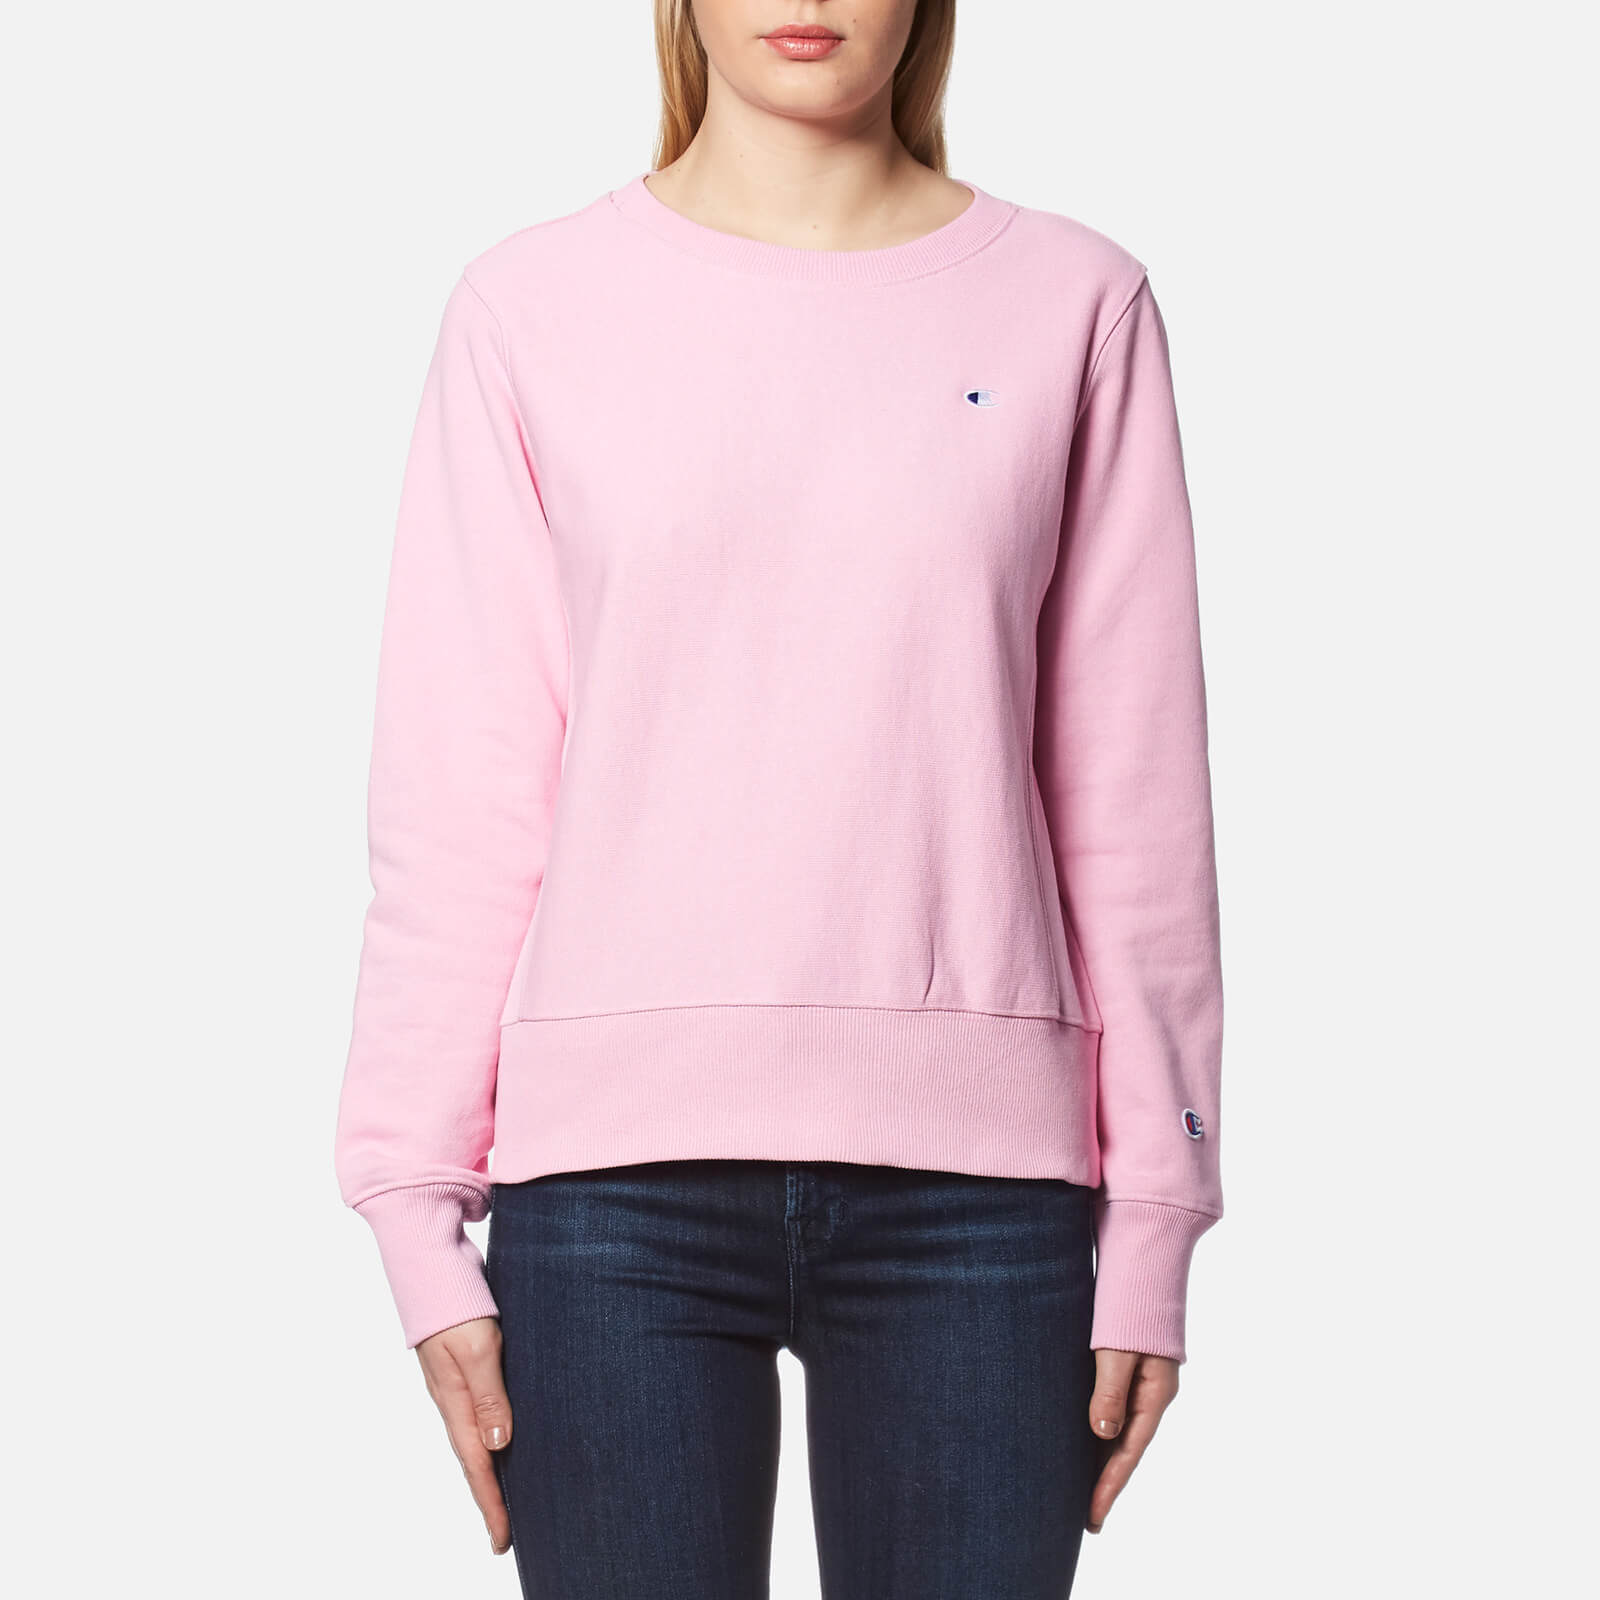 pink champion sweatshirt womens